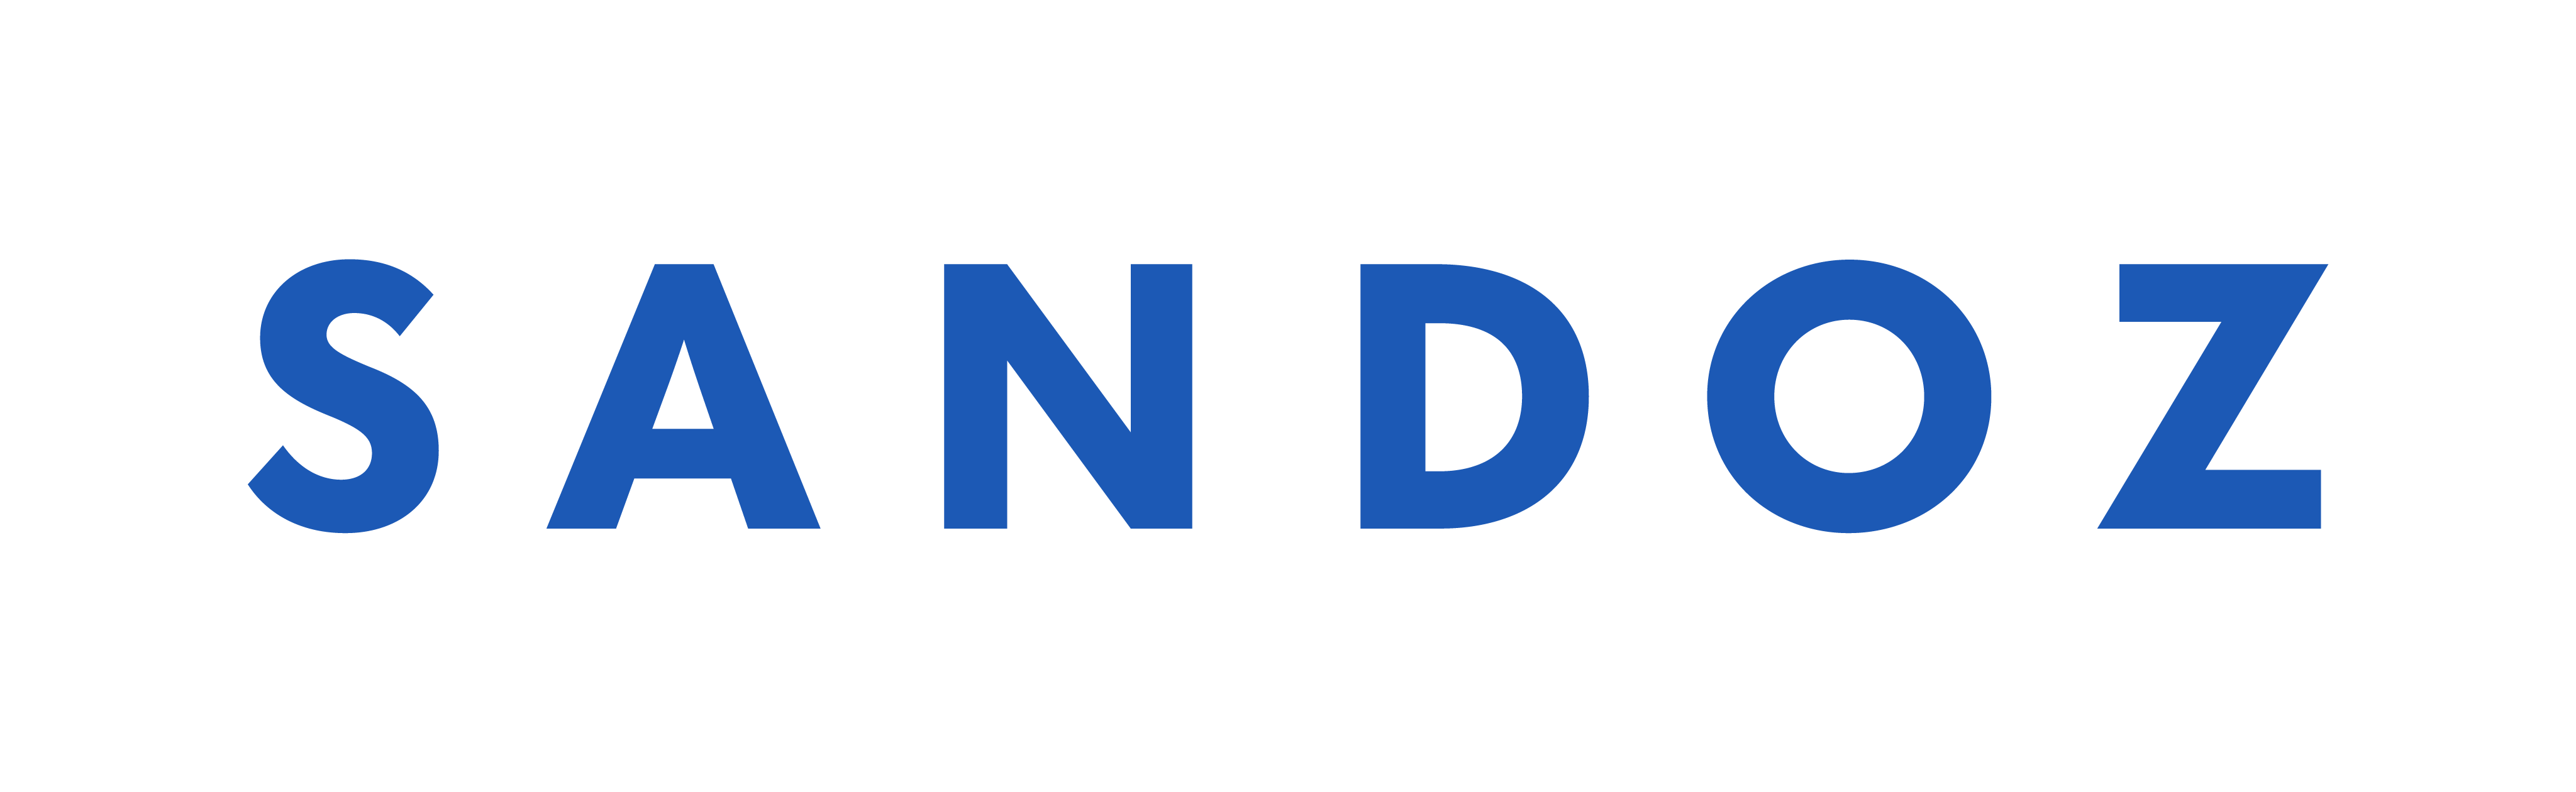 sandoz company logo